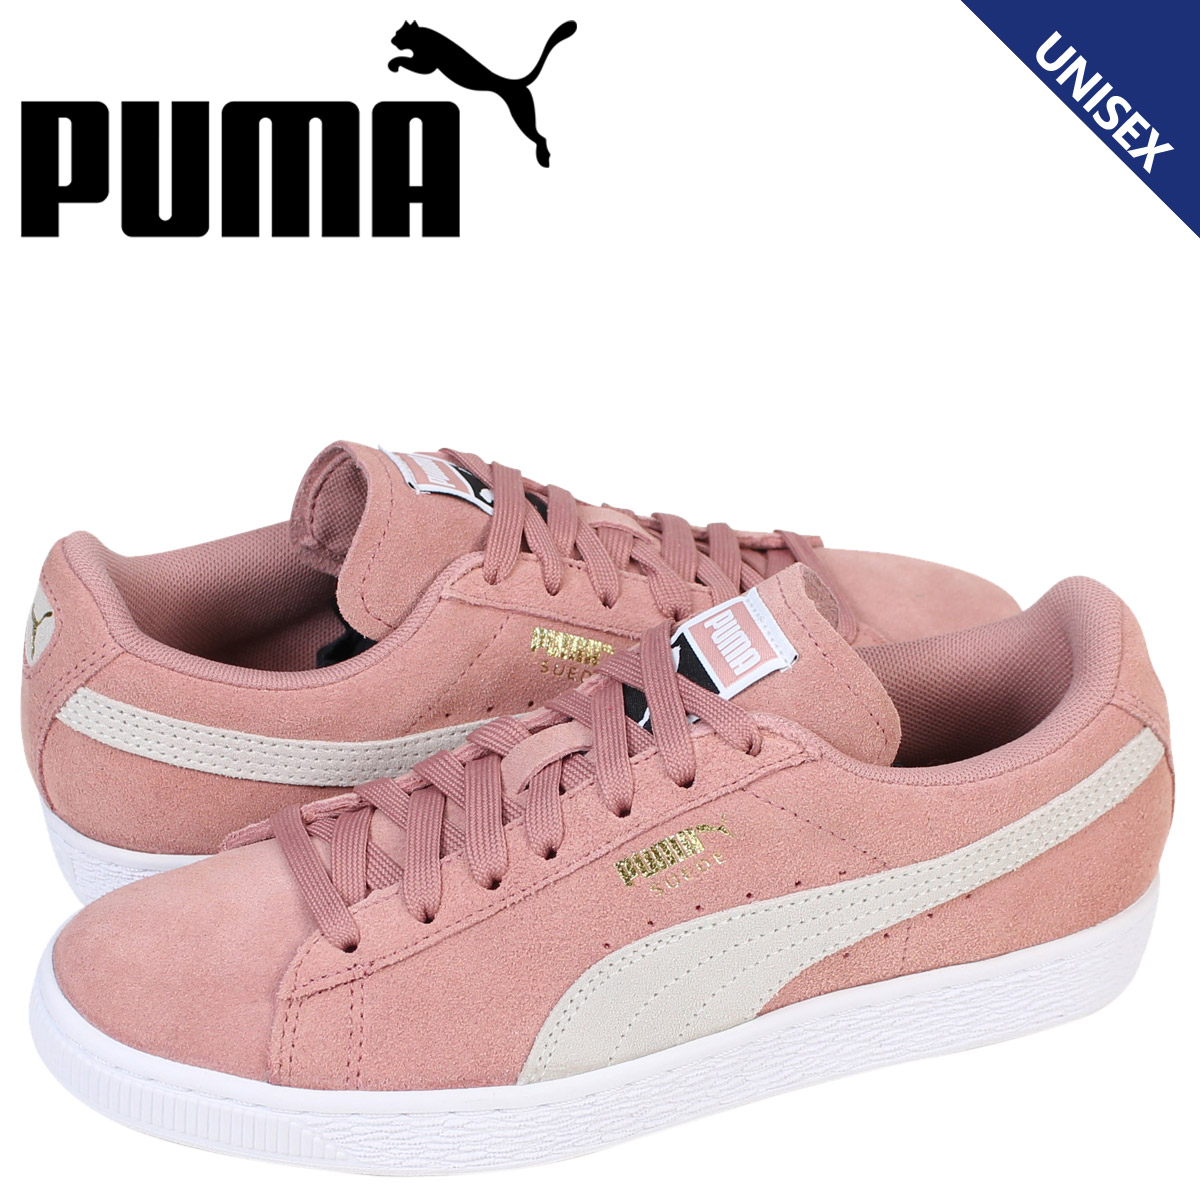 pink puma classic